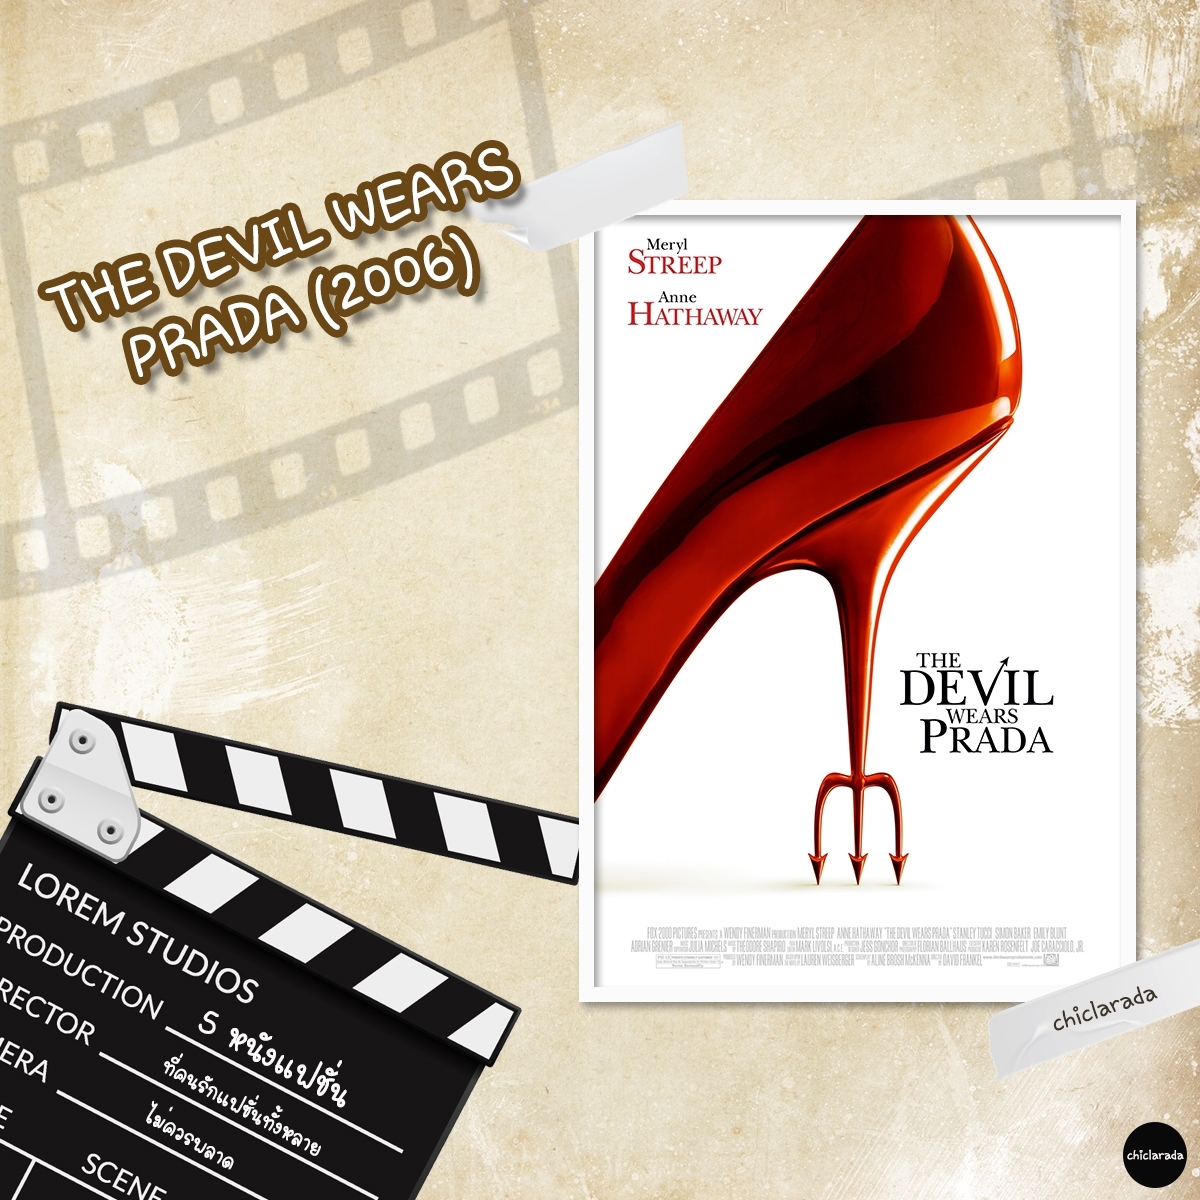 The Devil Wears Prada (2006)5 หนังแฟชั่นที่คนรักแฟชั่น